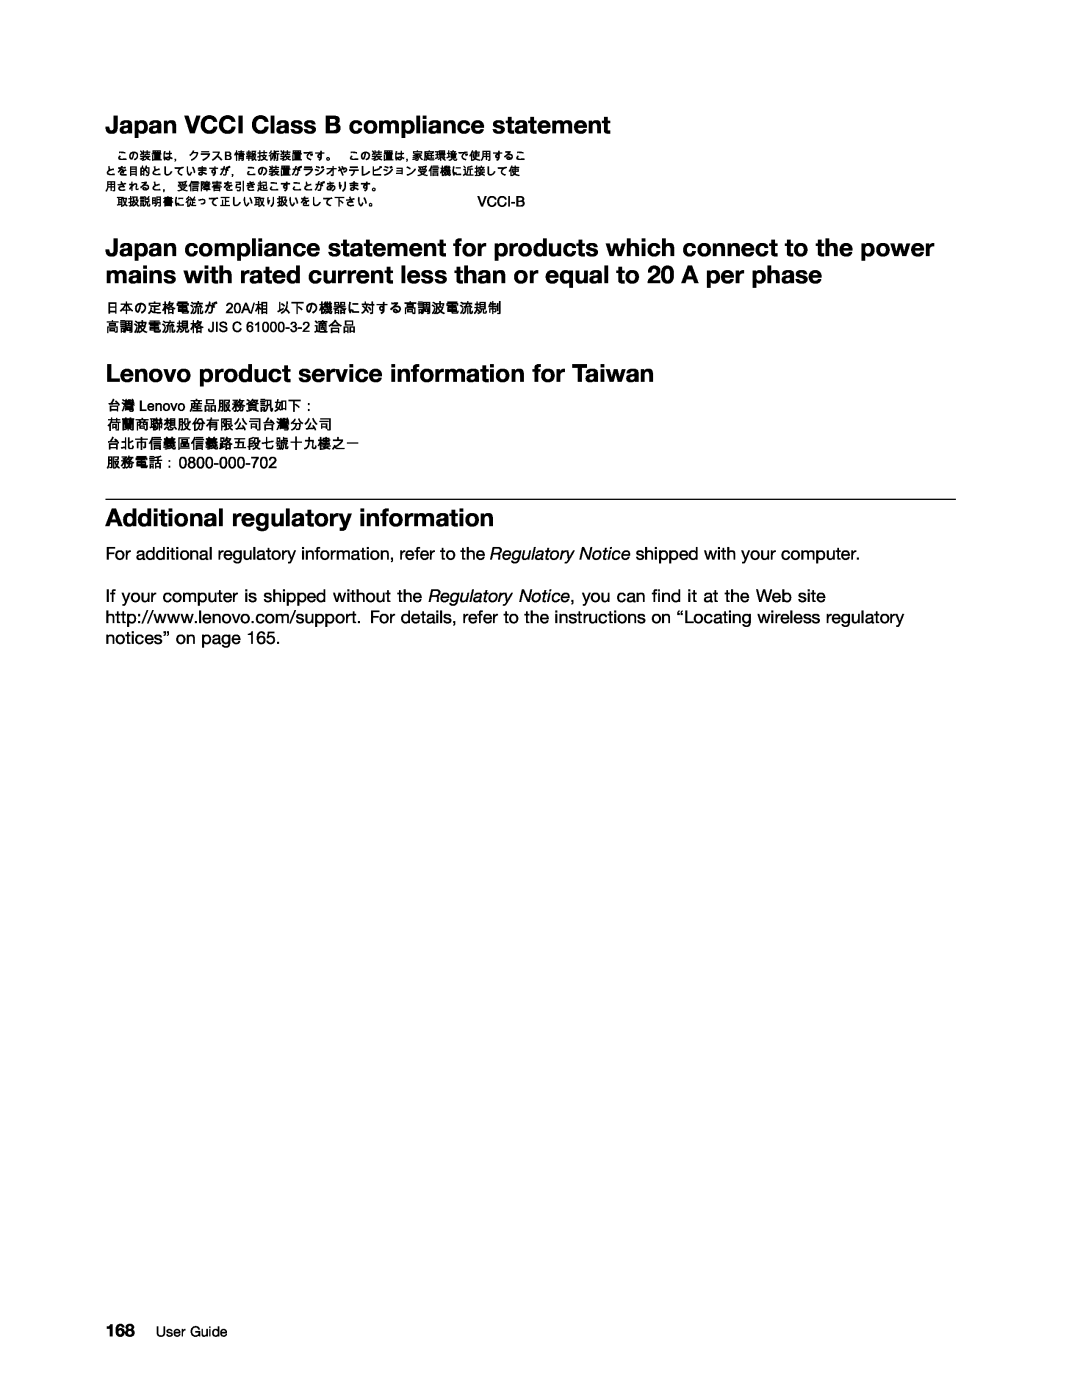 Lenovo E520, E420 manual Japan VCCI Class B compliance statement, Lenovo product service information for Taiwan, User Guide 